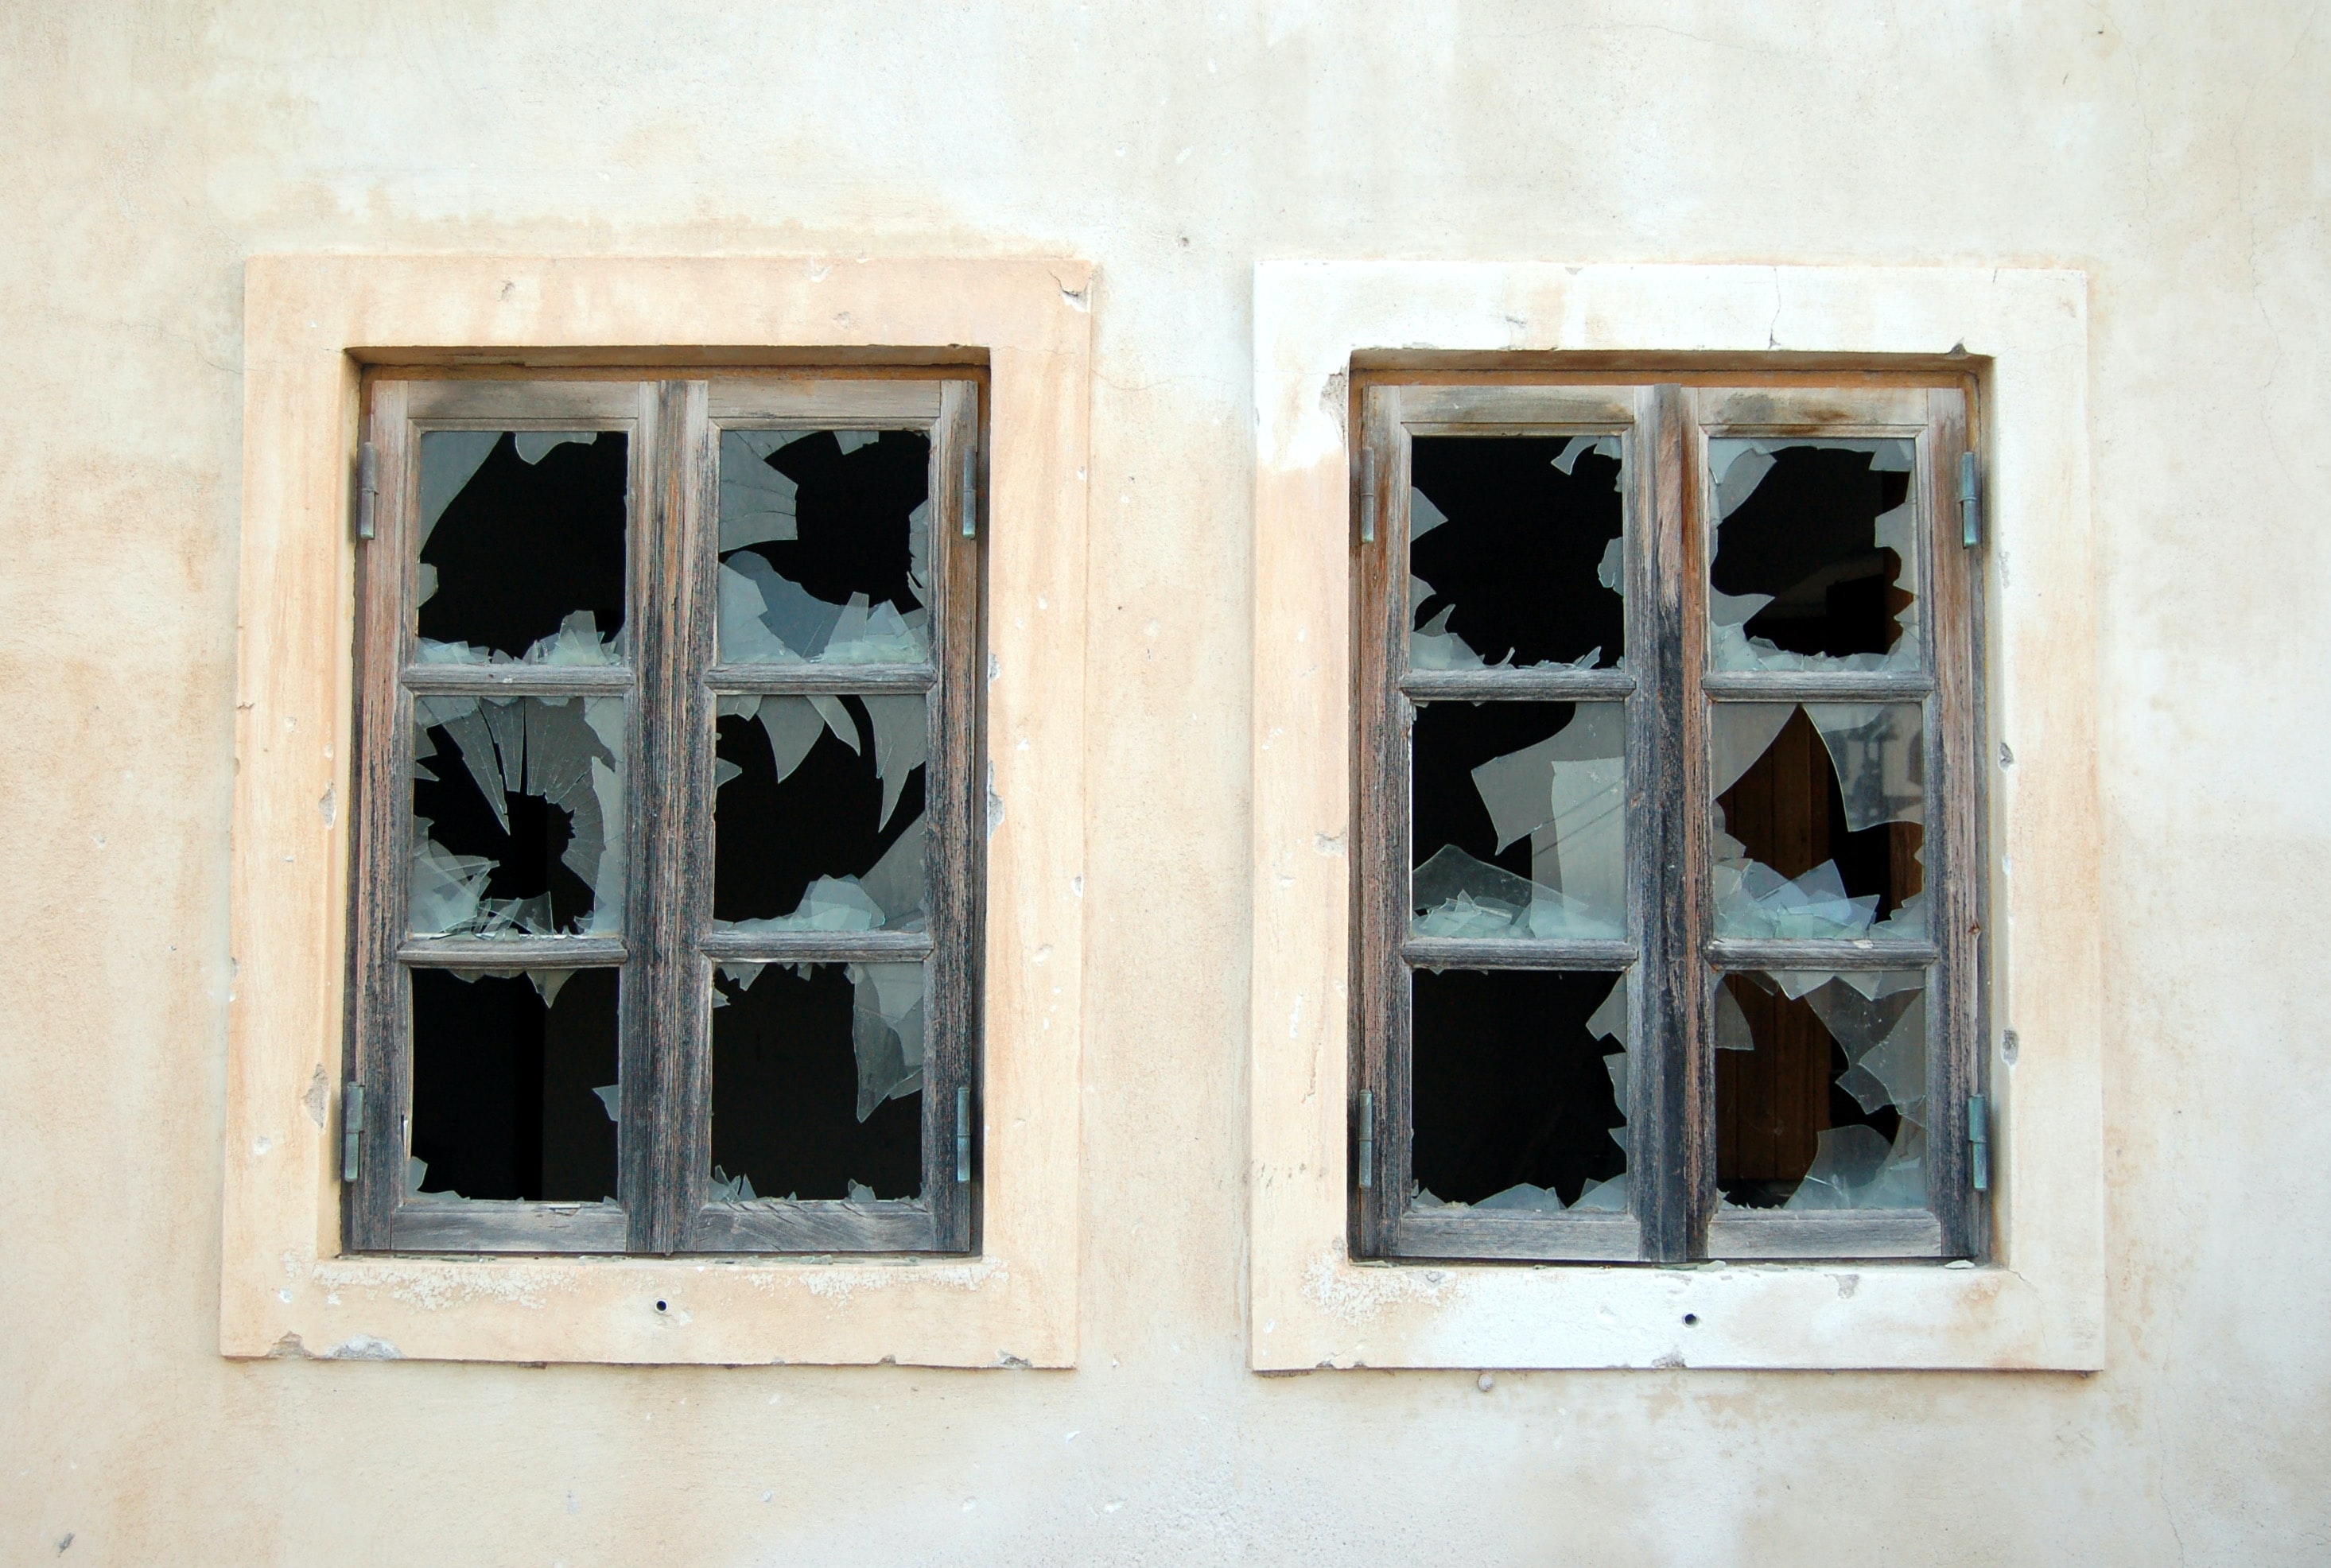 An image of broken windows in a building